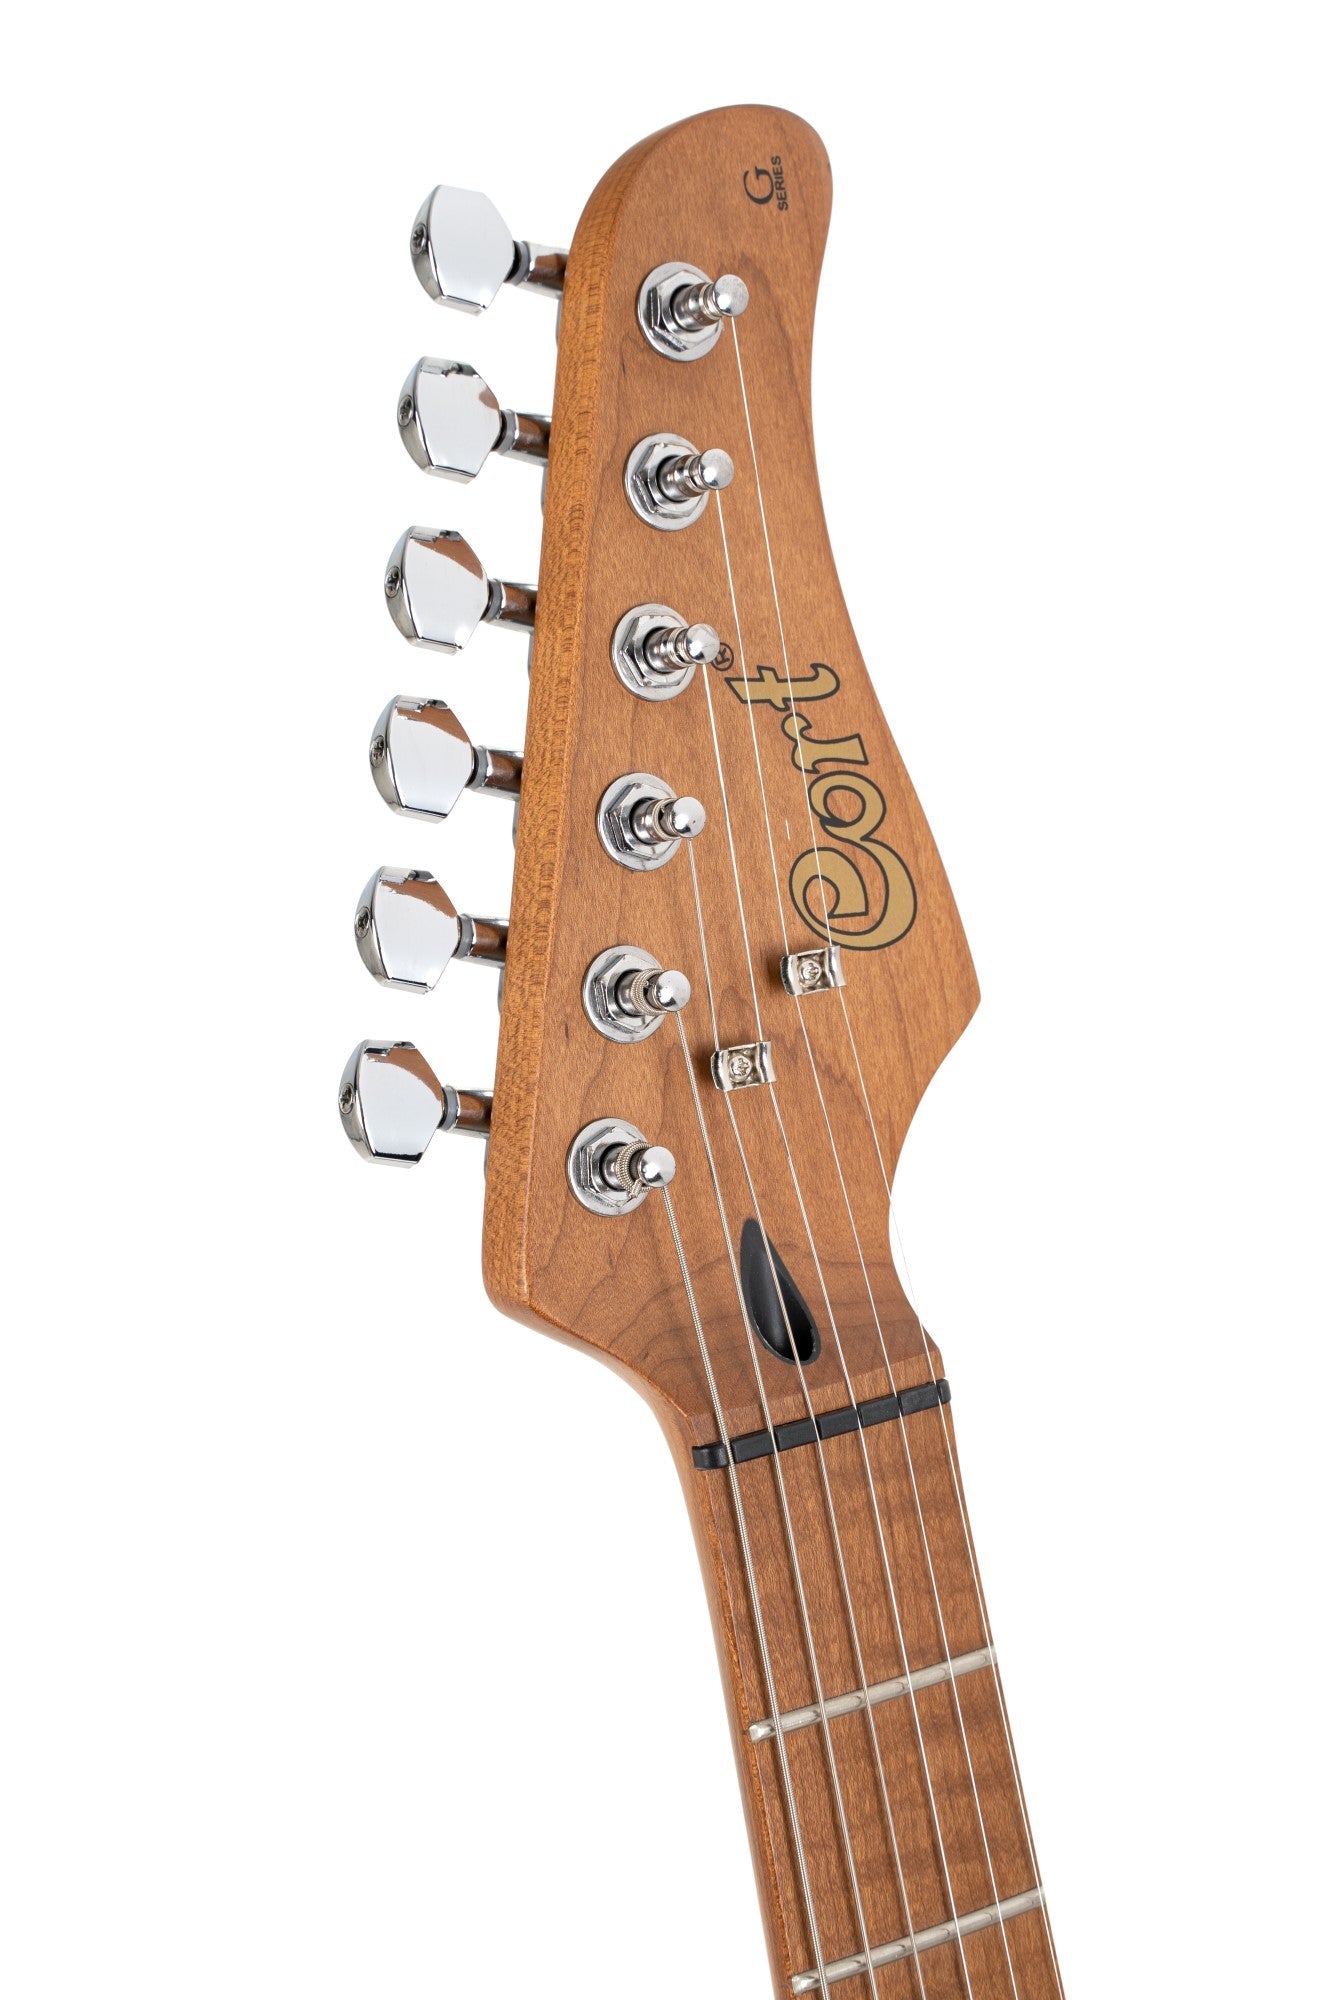 Cort G250 SE Olive Dark Green, Electric Guitar for sale at Richards Guitars.